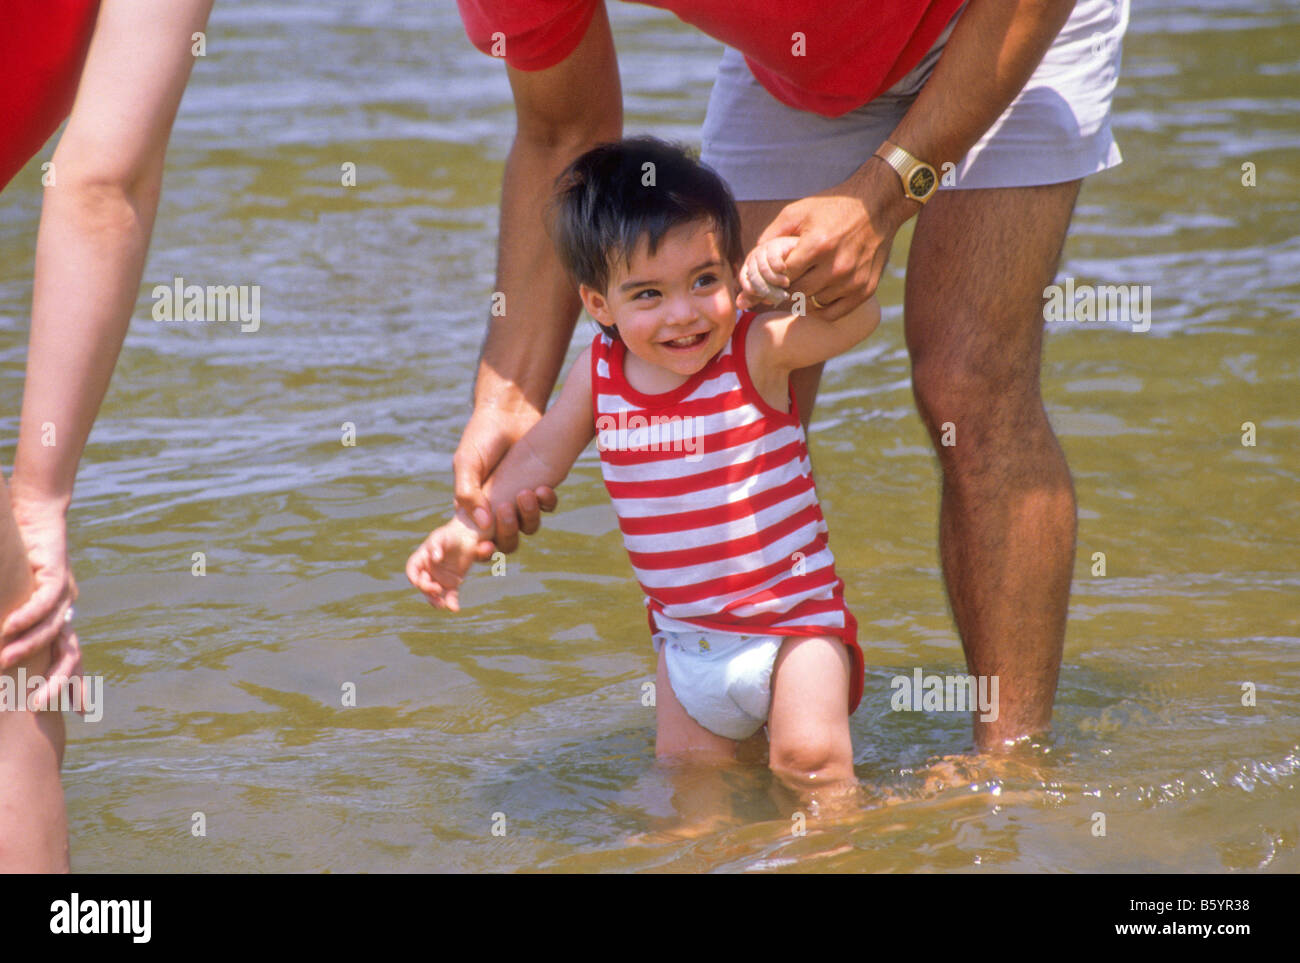 Hispanic toddler laughs as his parents help him wade in lake waters. Stock Photo